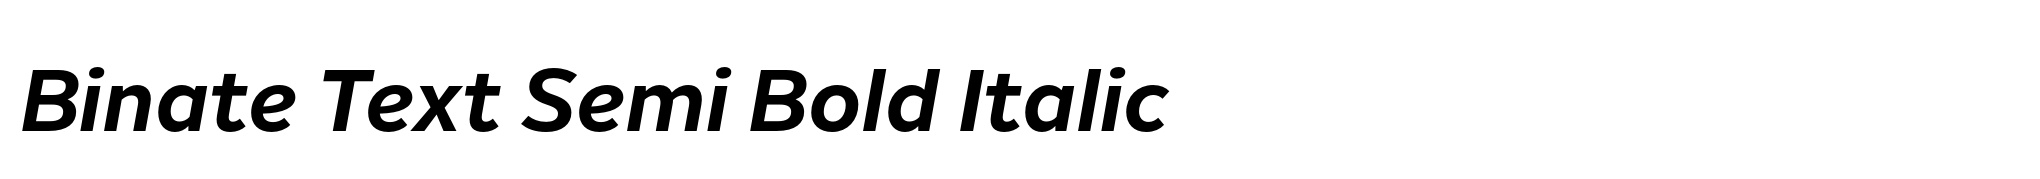 Binate Text Semi Bold Italic image